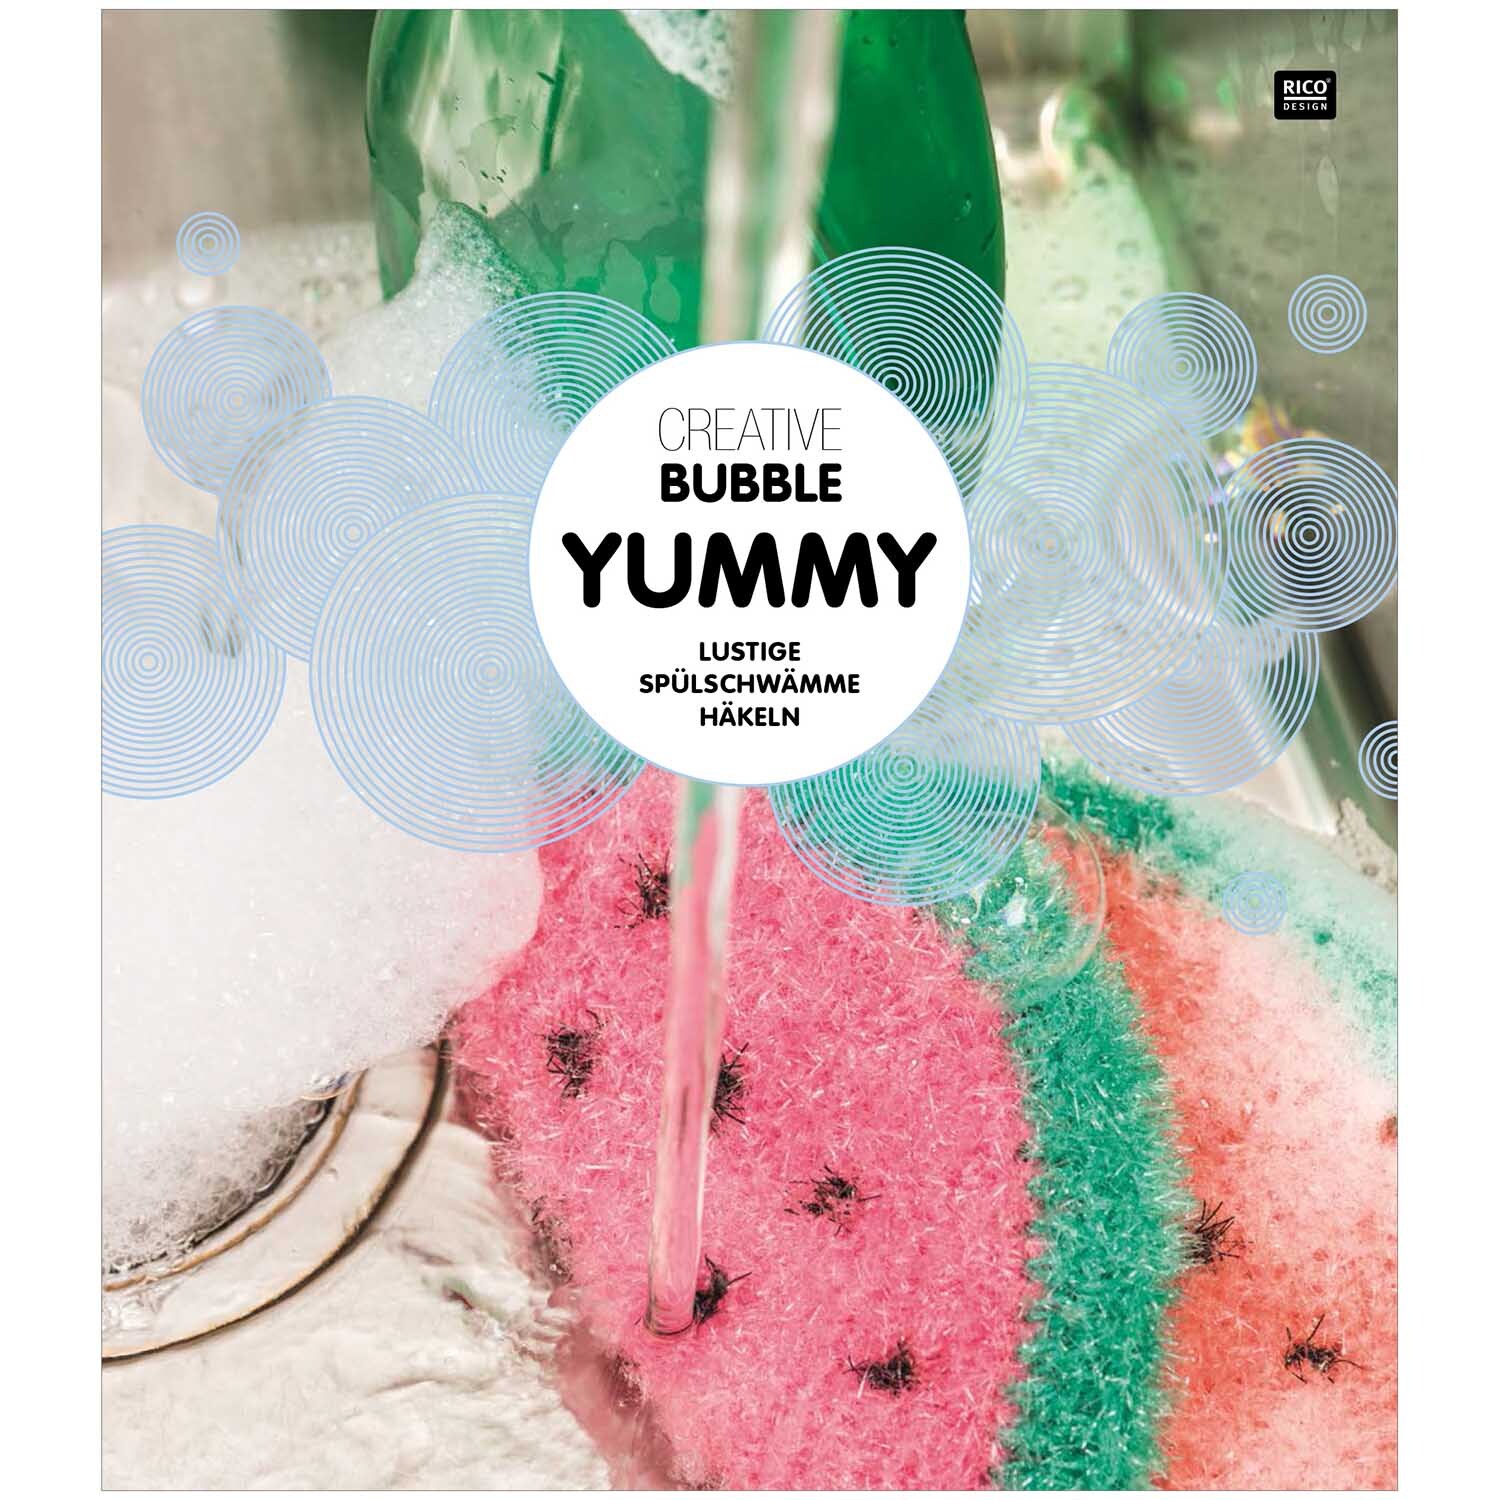 Creative Bubble Yummy - lustige Spülschwämme häkeln